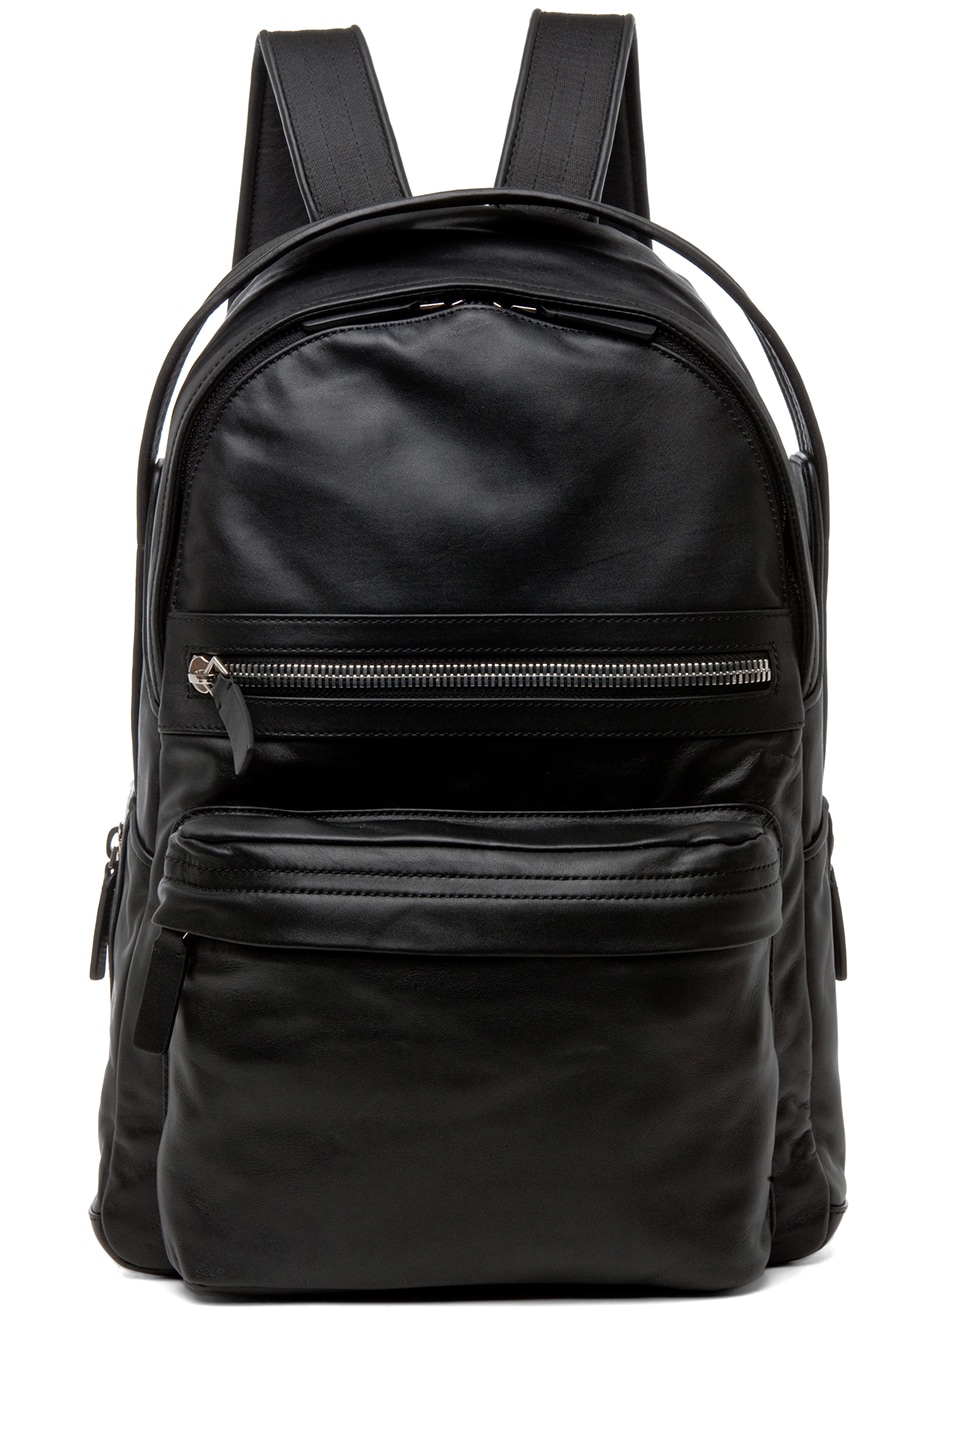 Alejandro Ingelmo Berlin Backpack in Black Leather | FWRD